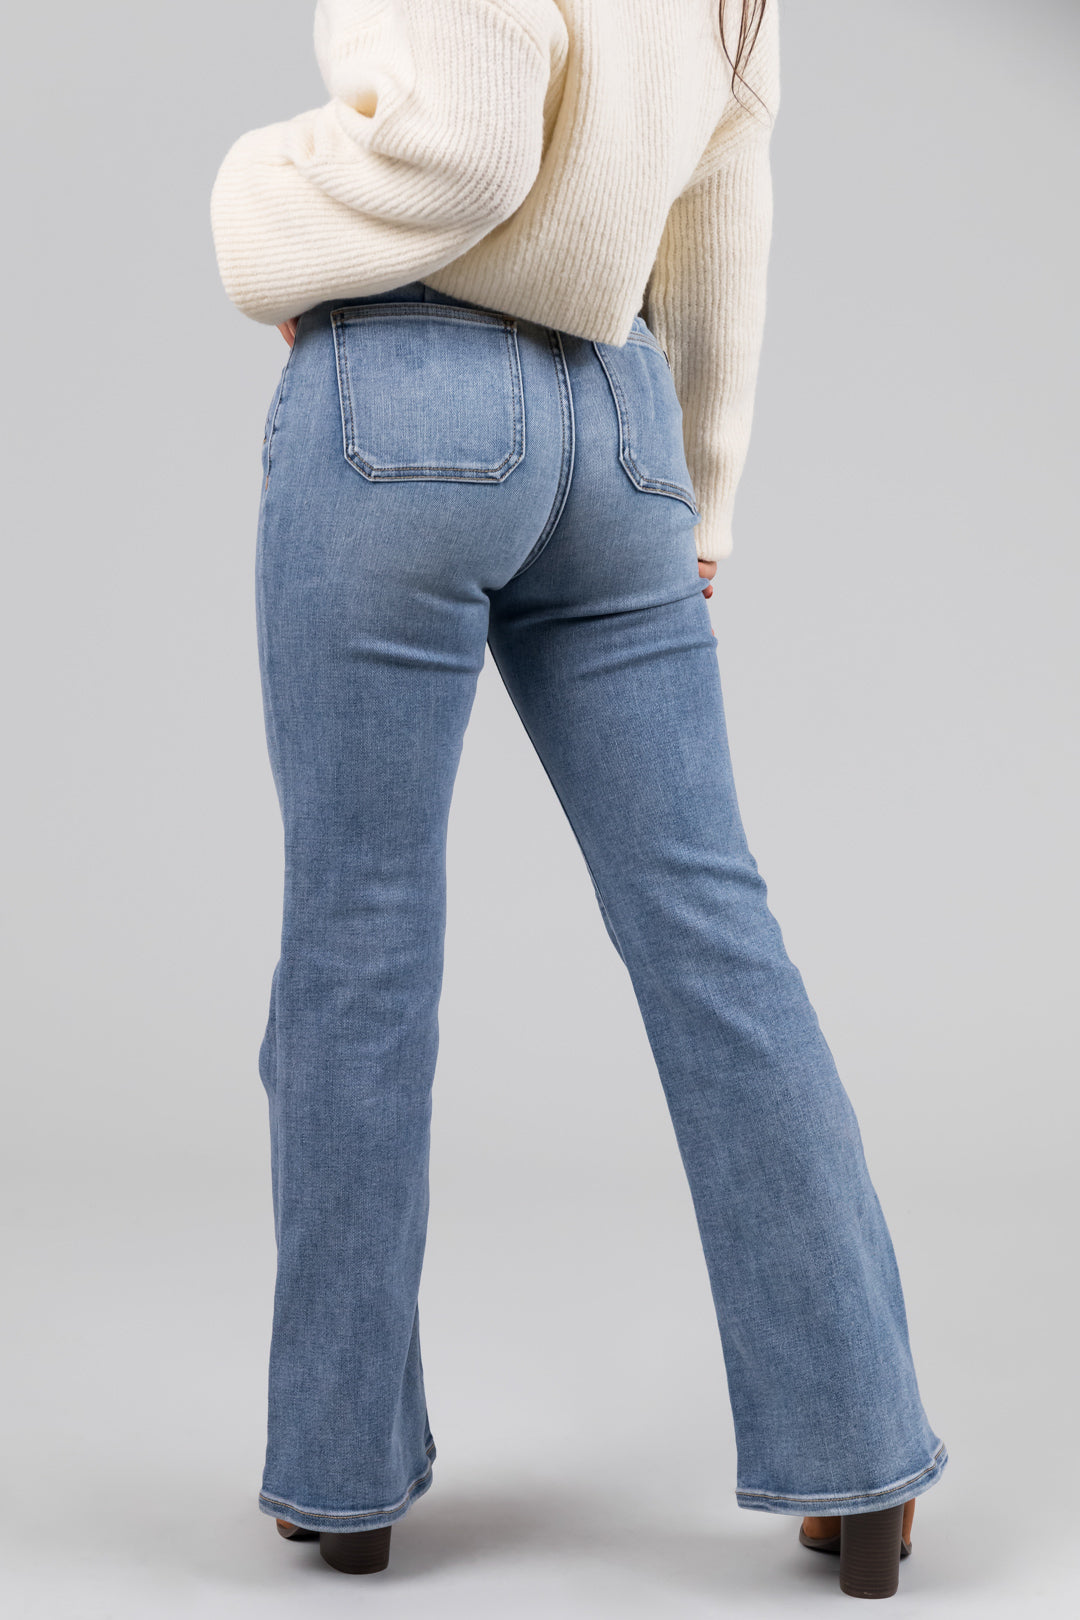 Sneak Peek Medium Light Wash Stretchy Slim Bootcut Jeans